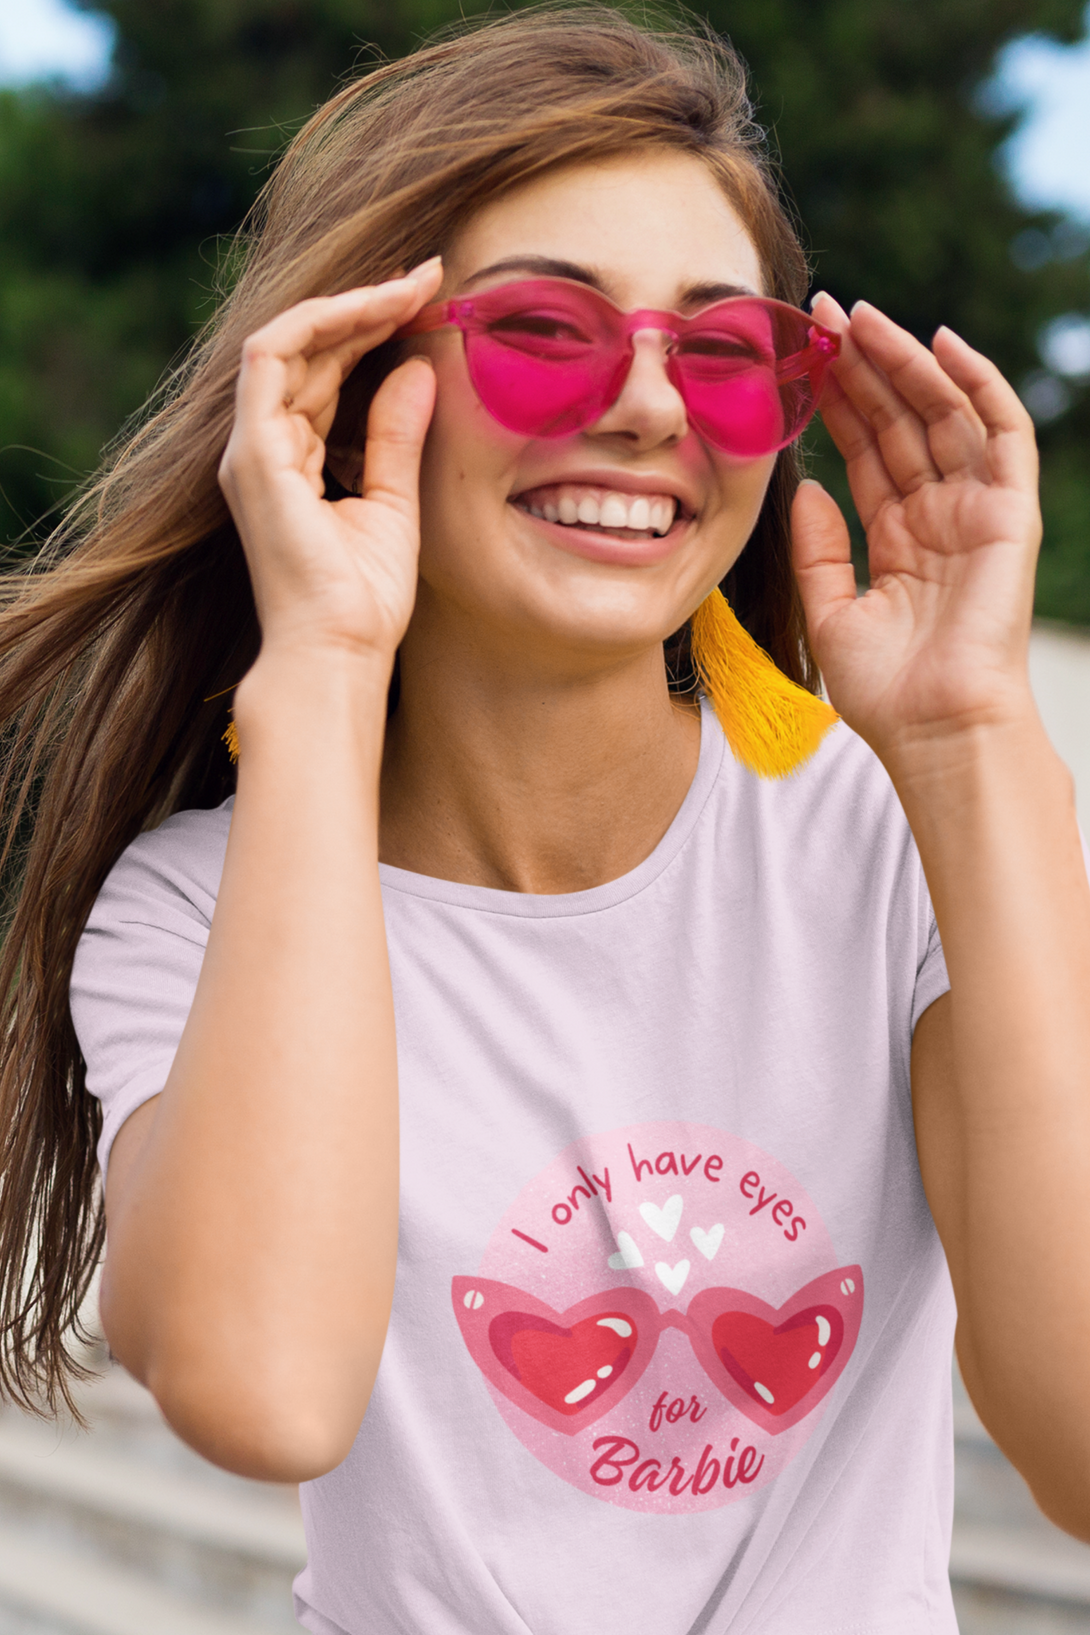 Barbie Eyes Printed T-Shirt For Women - WowWaves - 2